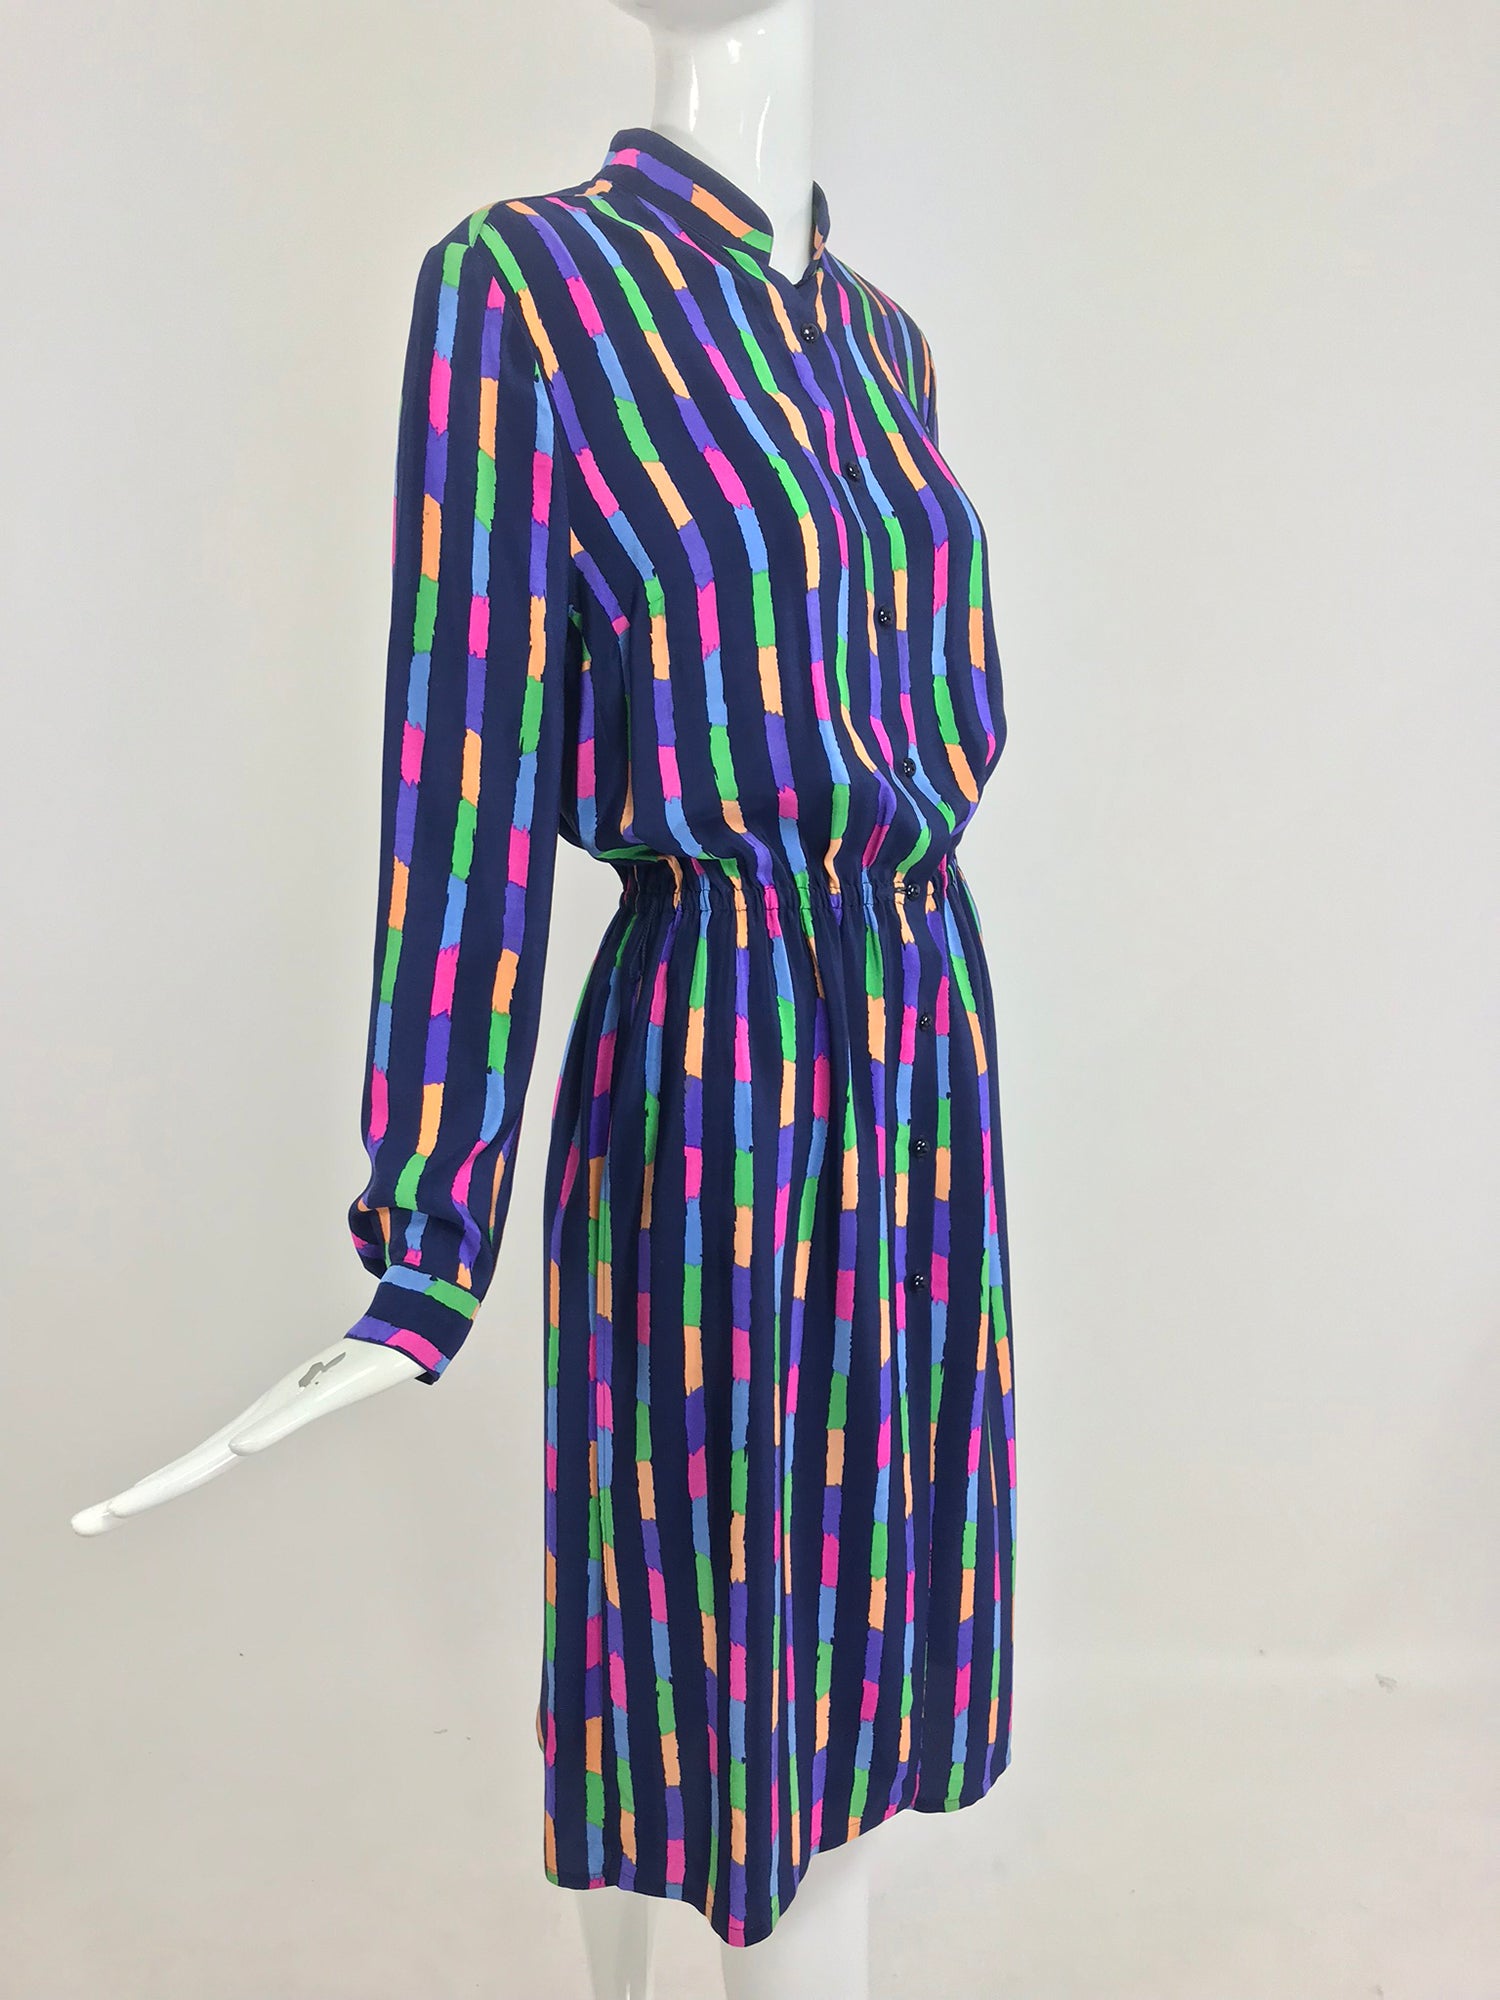 Louis Feraud Striped Silk Suit